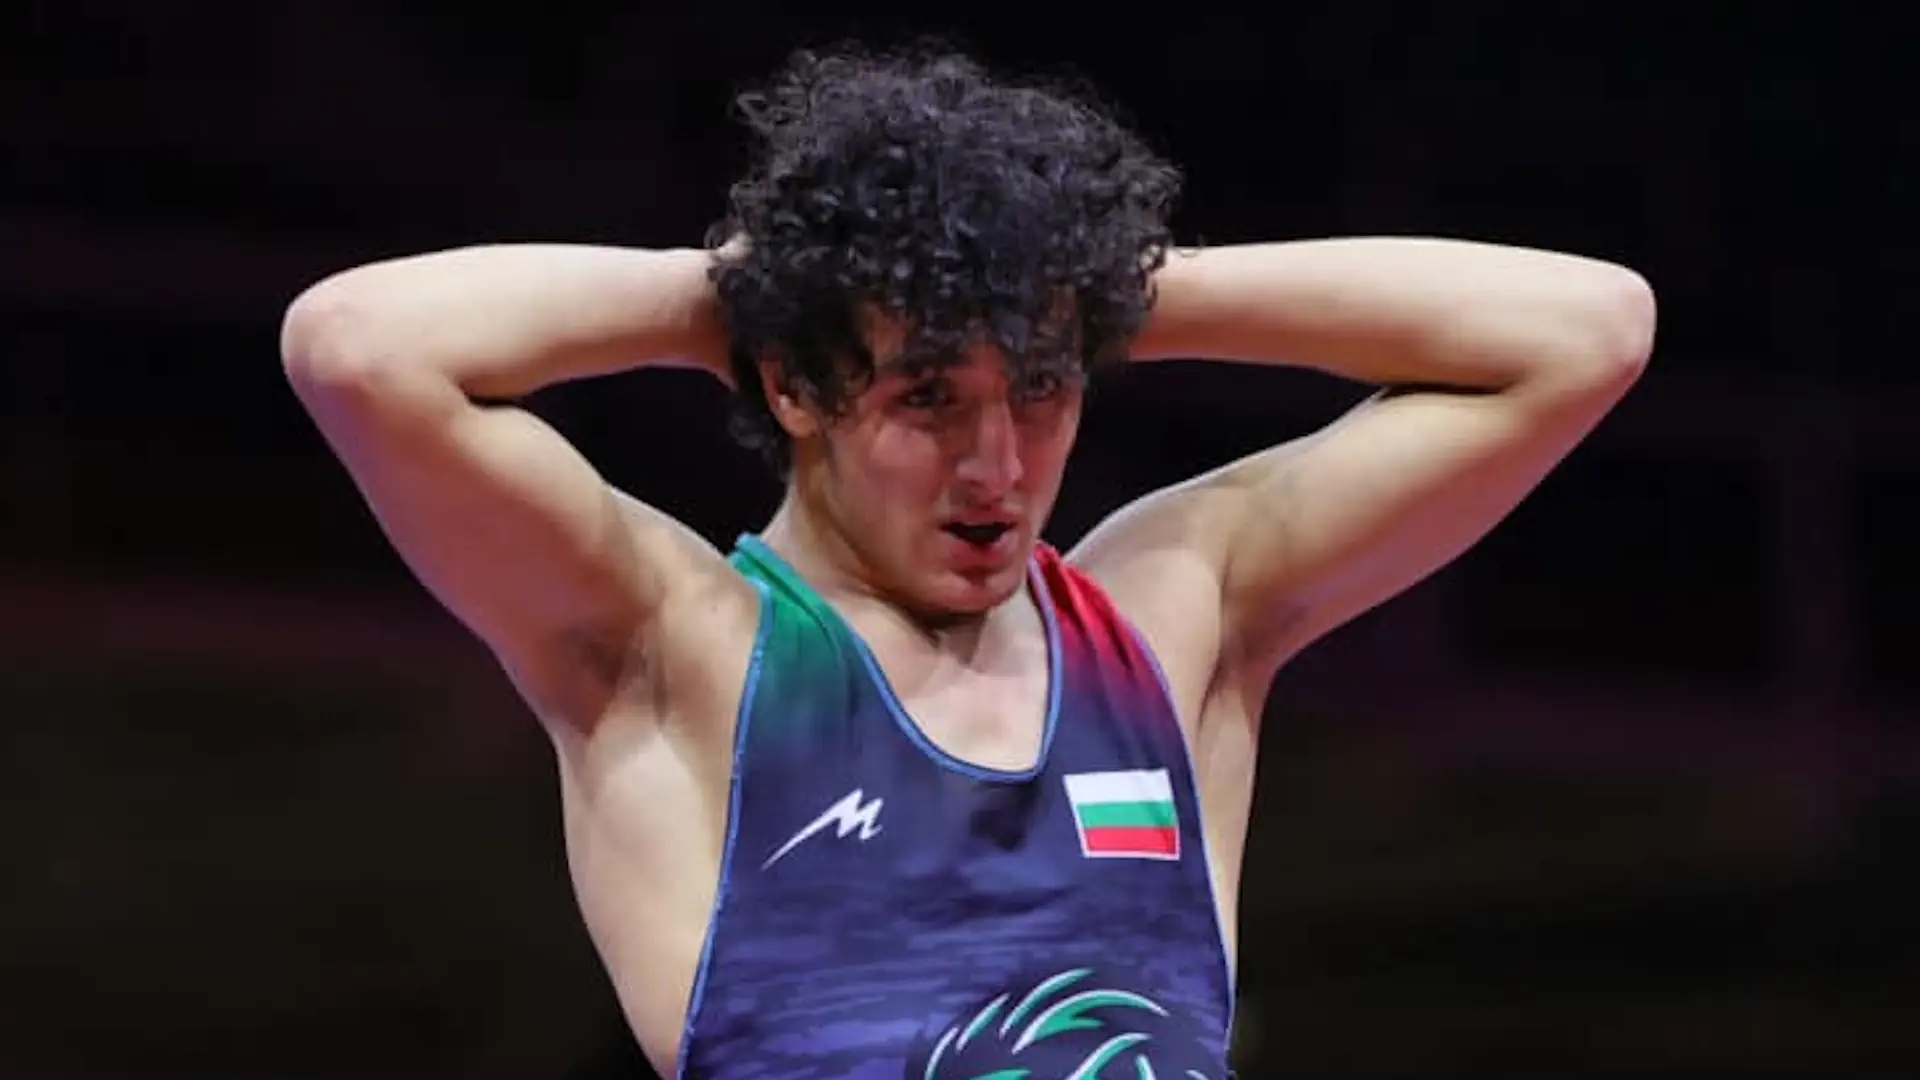 Edmond Nazaryan will miss the last Olympic qualifying tournament